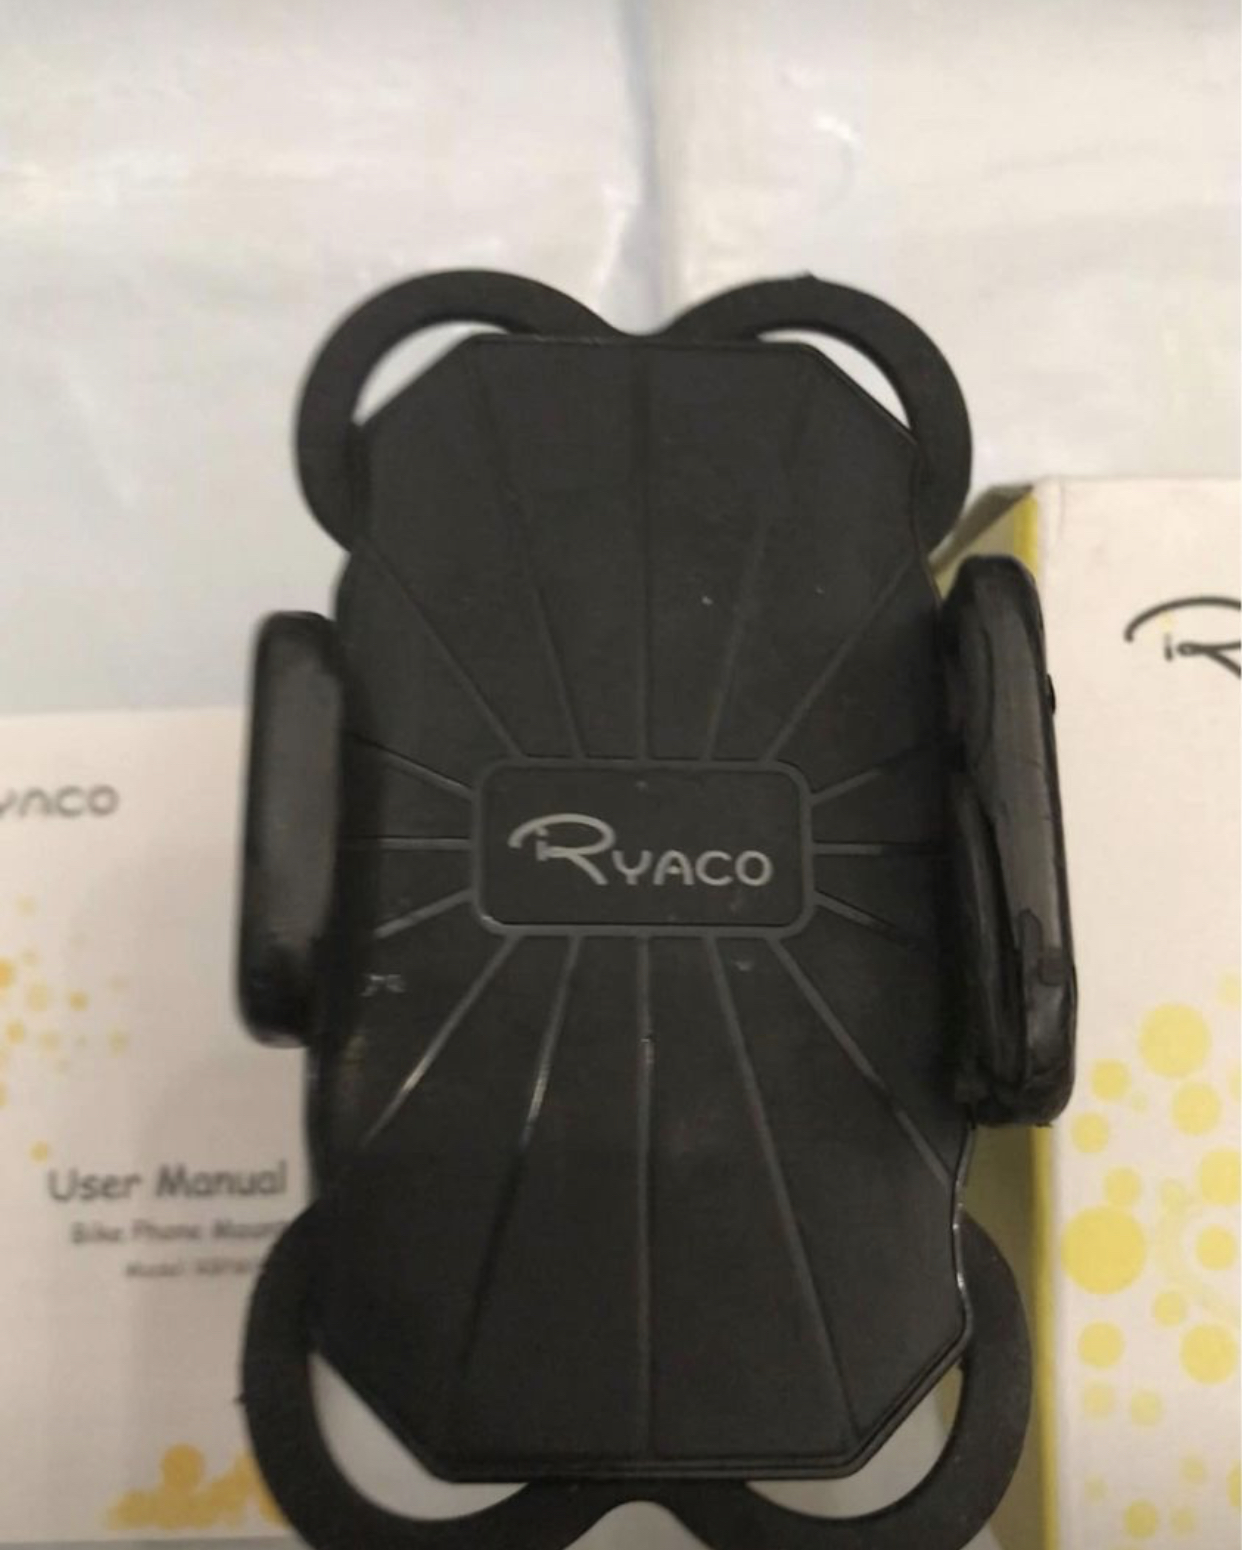 Ryaco bike phone mount